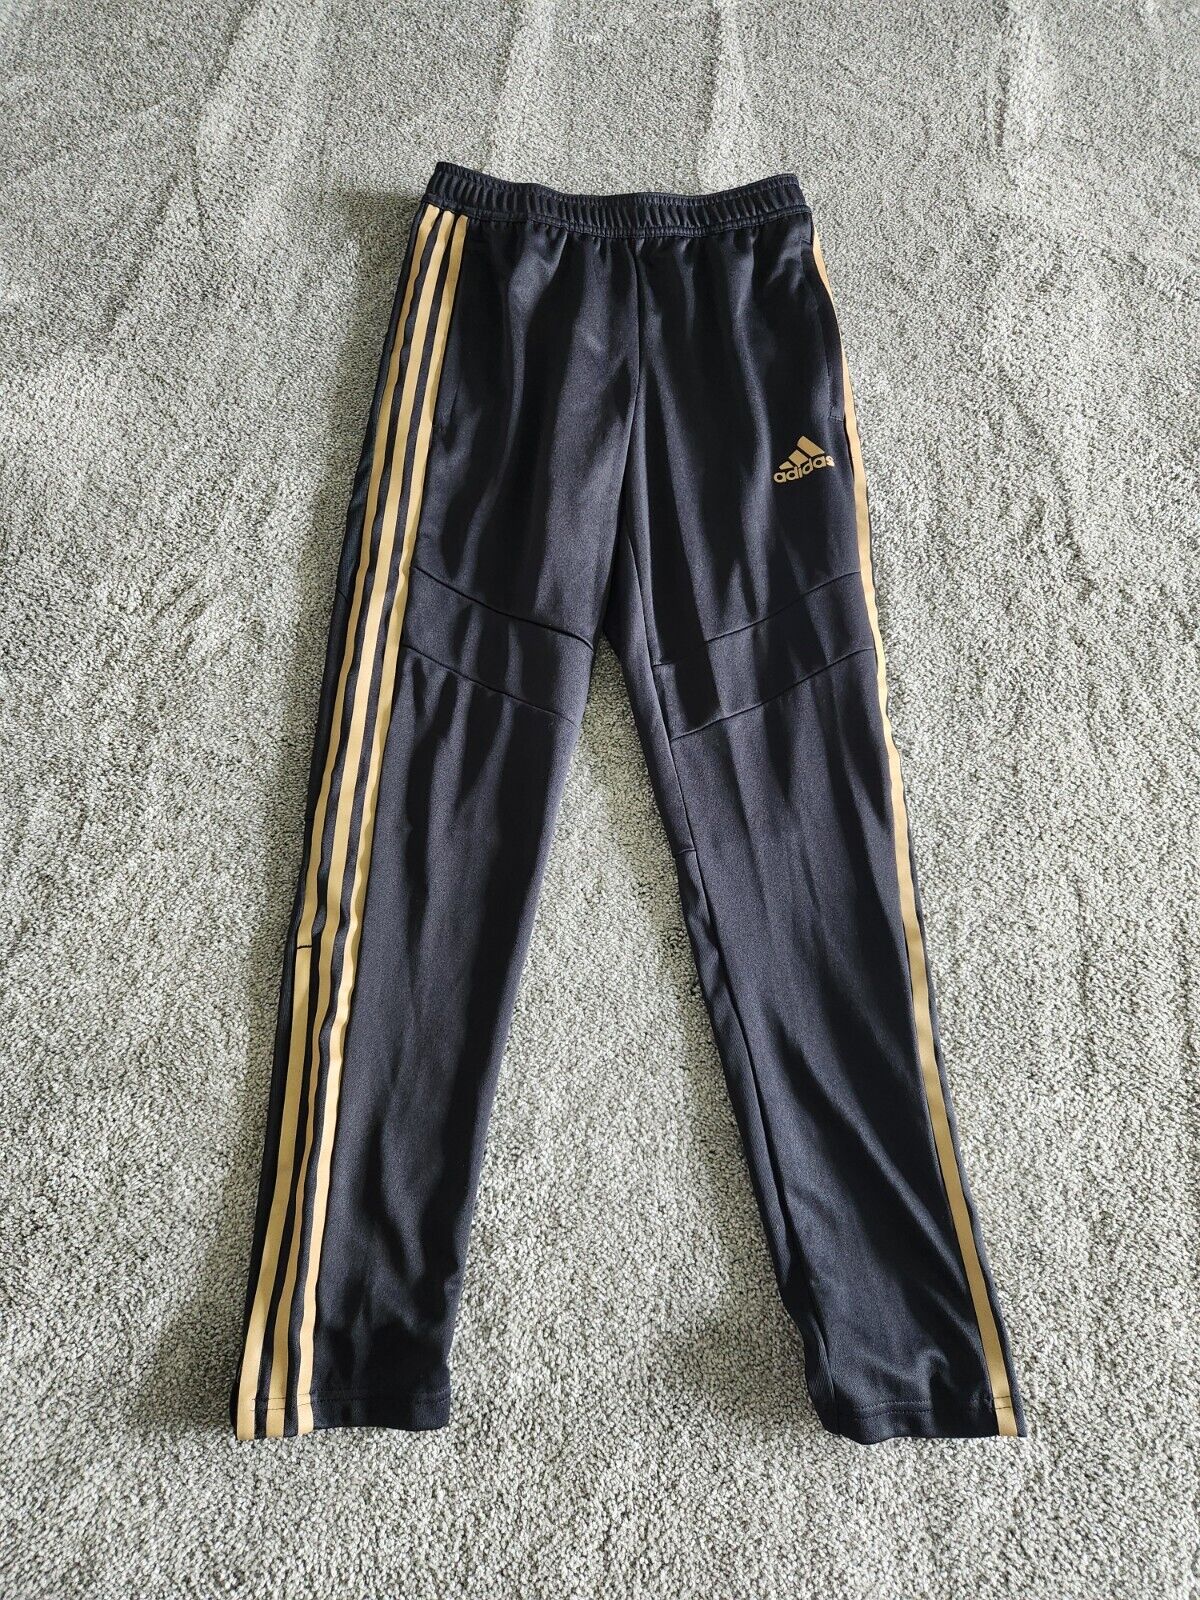 Adidas Men's Climacool Sweatpants, S, Black /Gold… - image 2